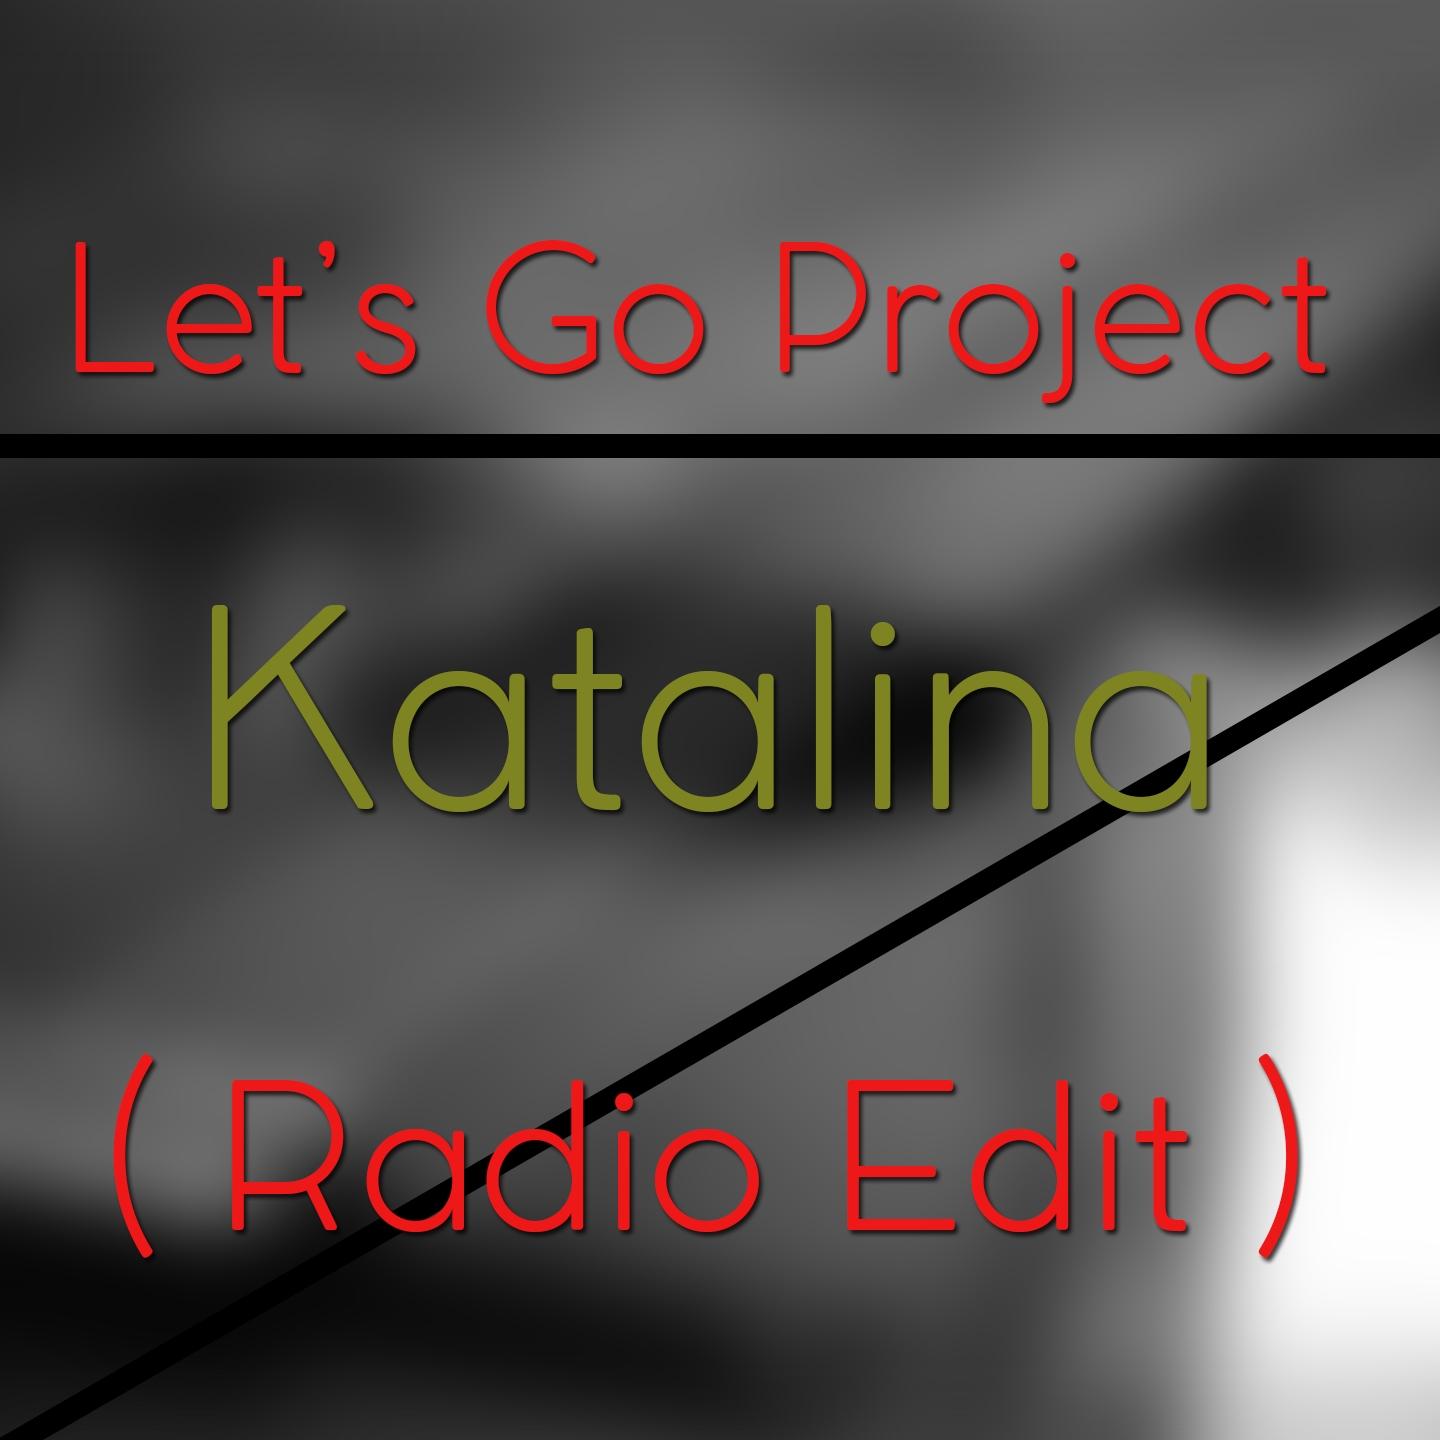 Katalina (Radio Edit)